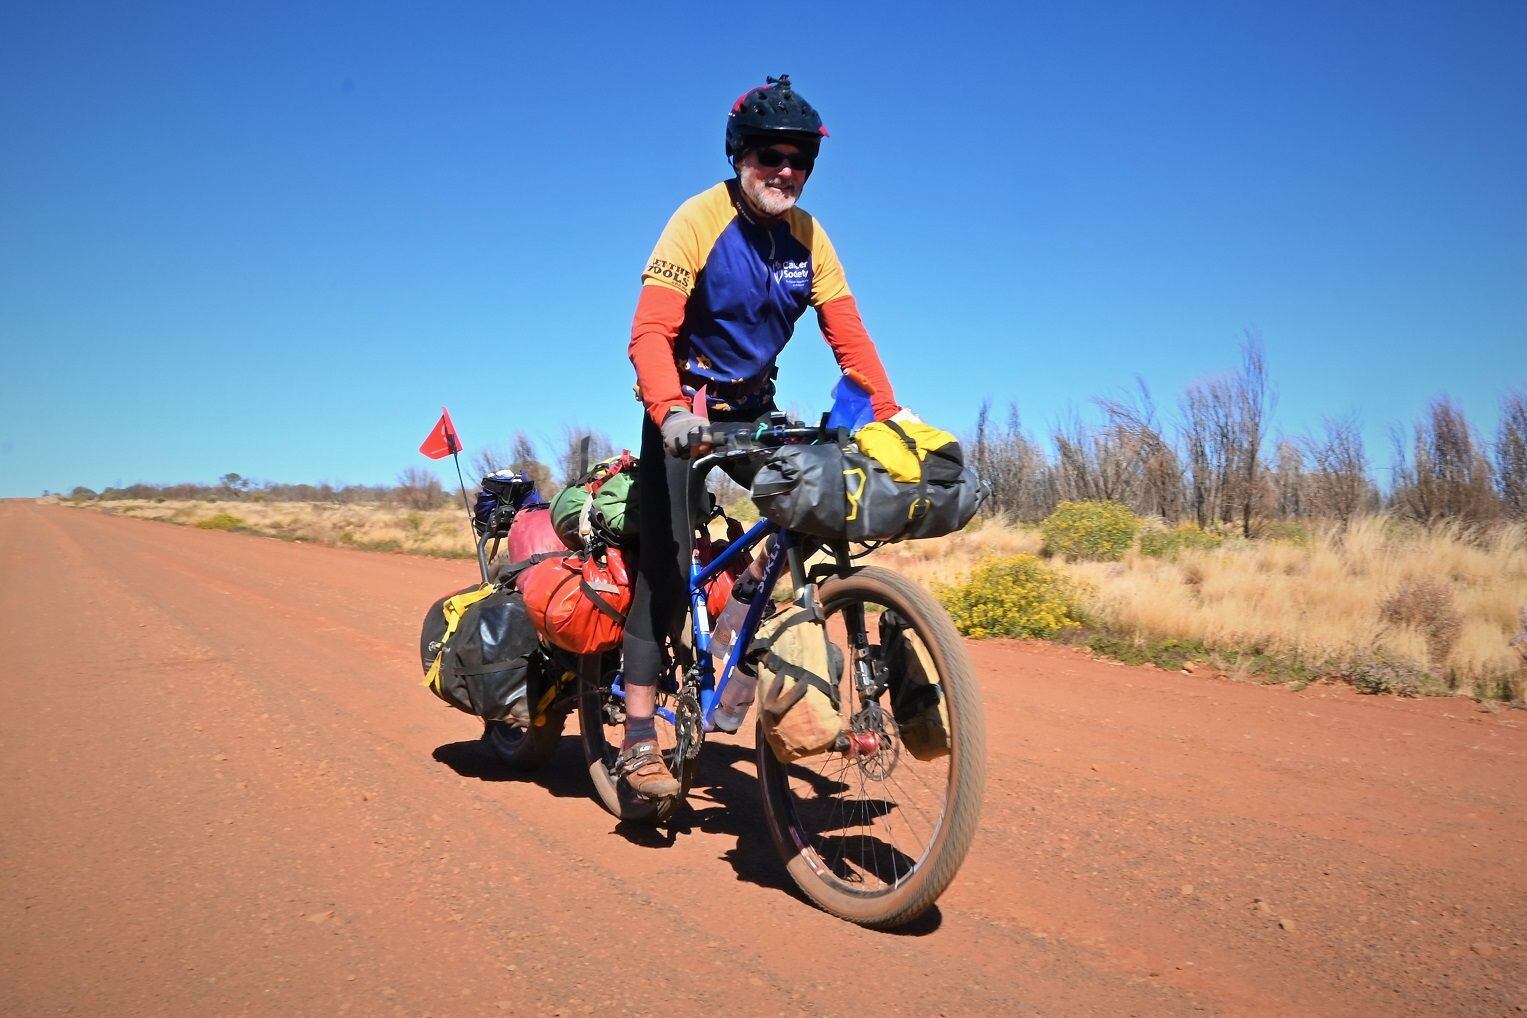 lindsay gault undertaking an 11,000km fundraising bike ride